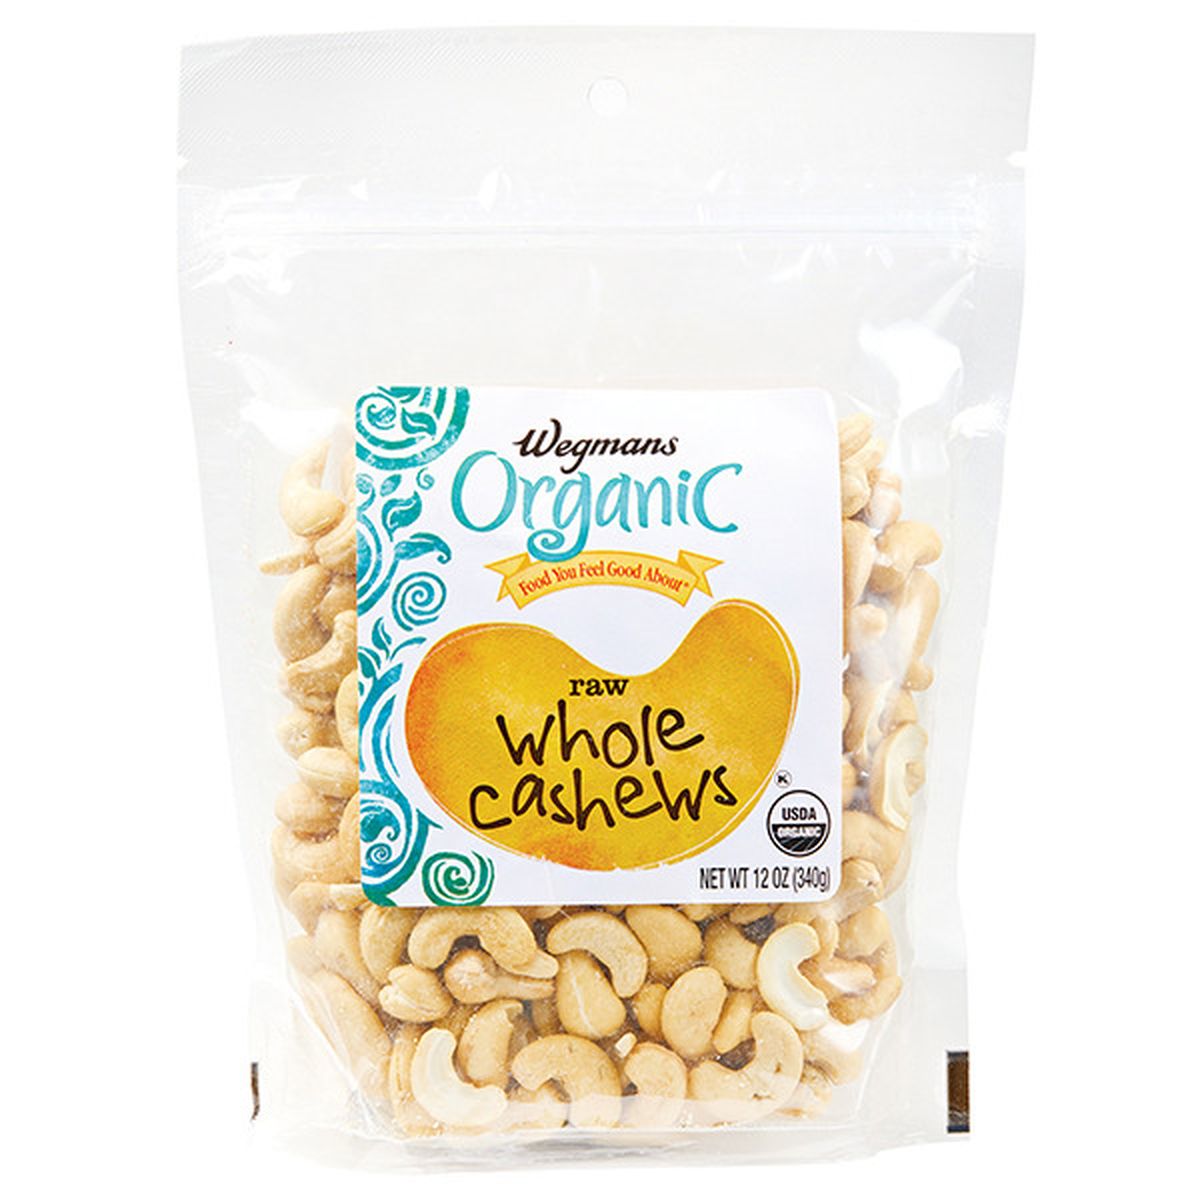 Calories in Wegmans Organic Raw Whole Cashews